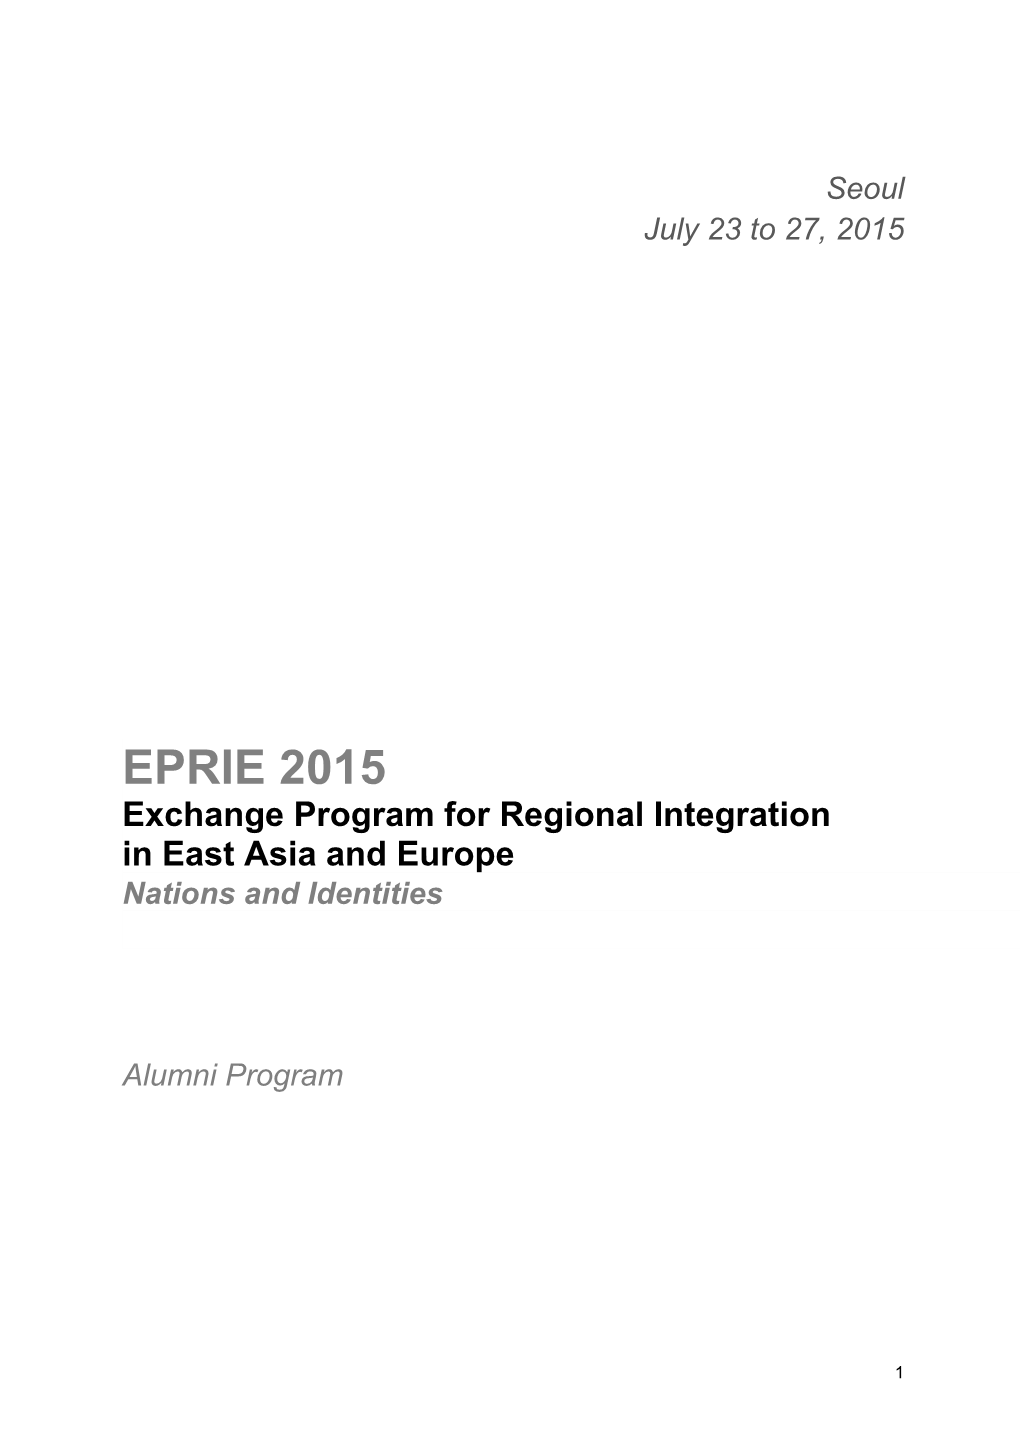 EPRIE 2015 Alumni Program